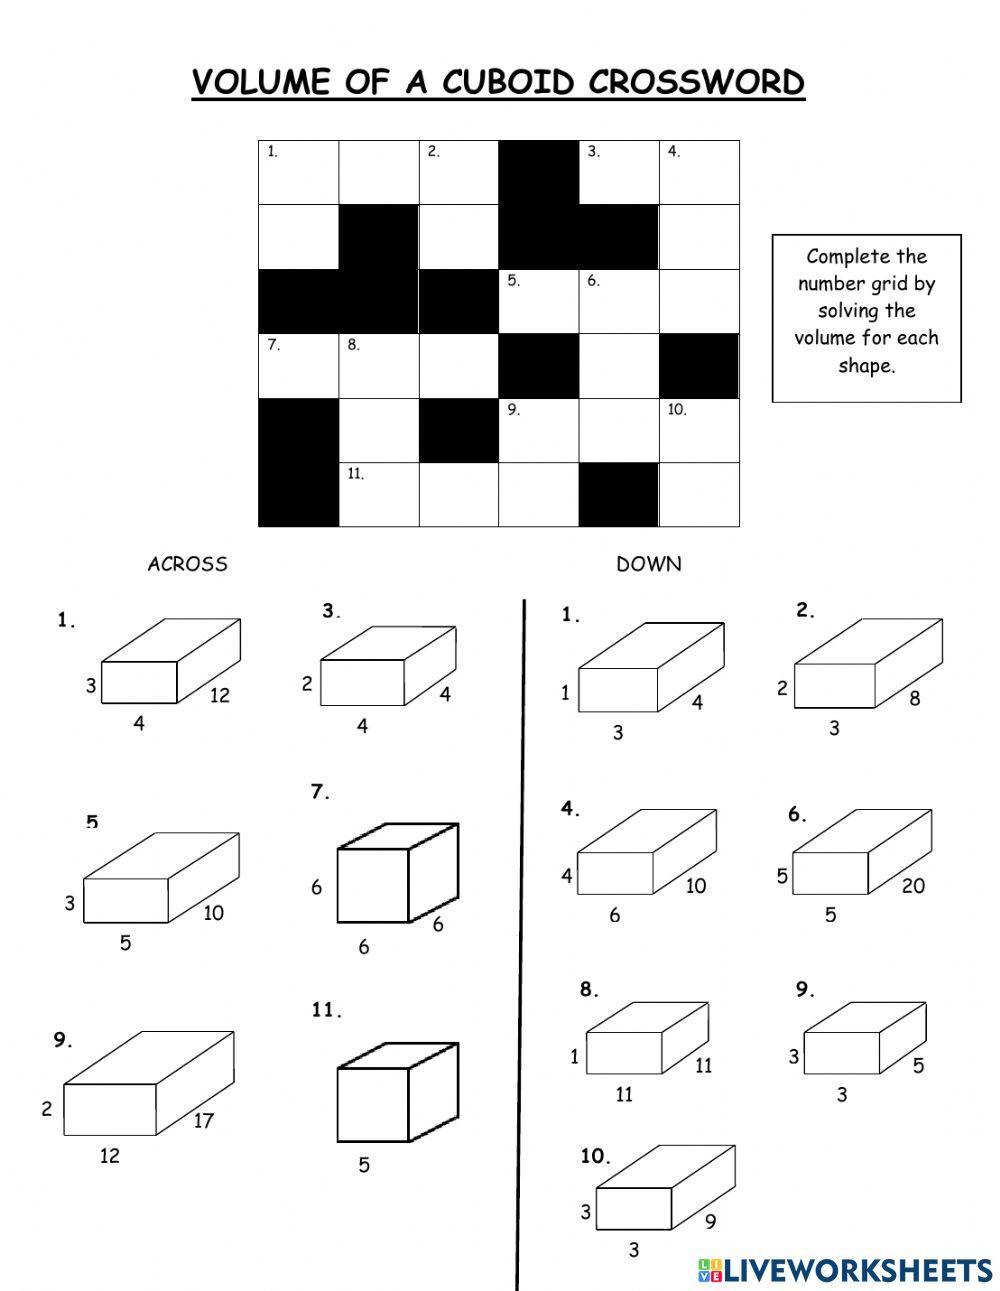 Volume of Cuboid Crossword